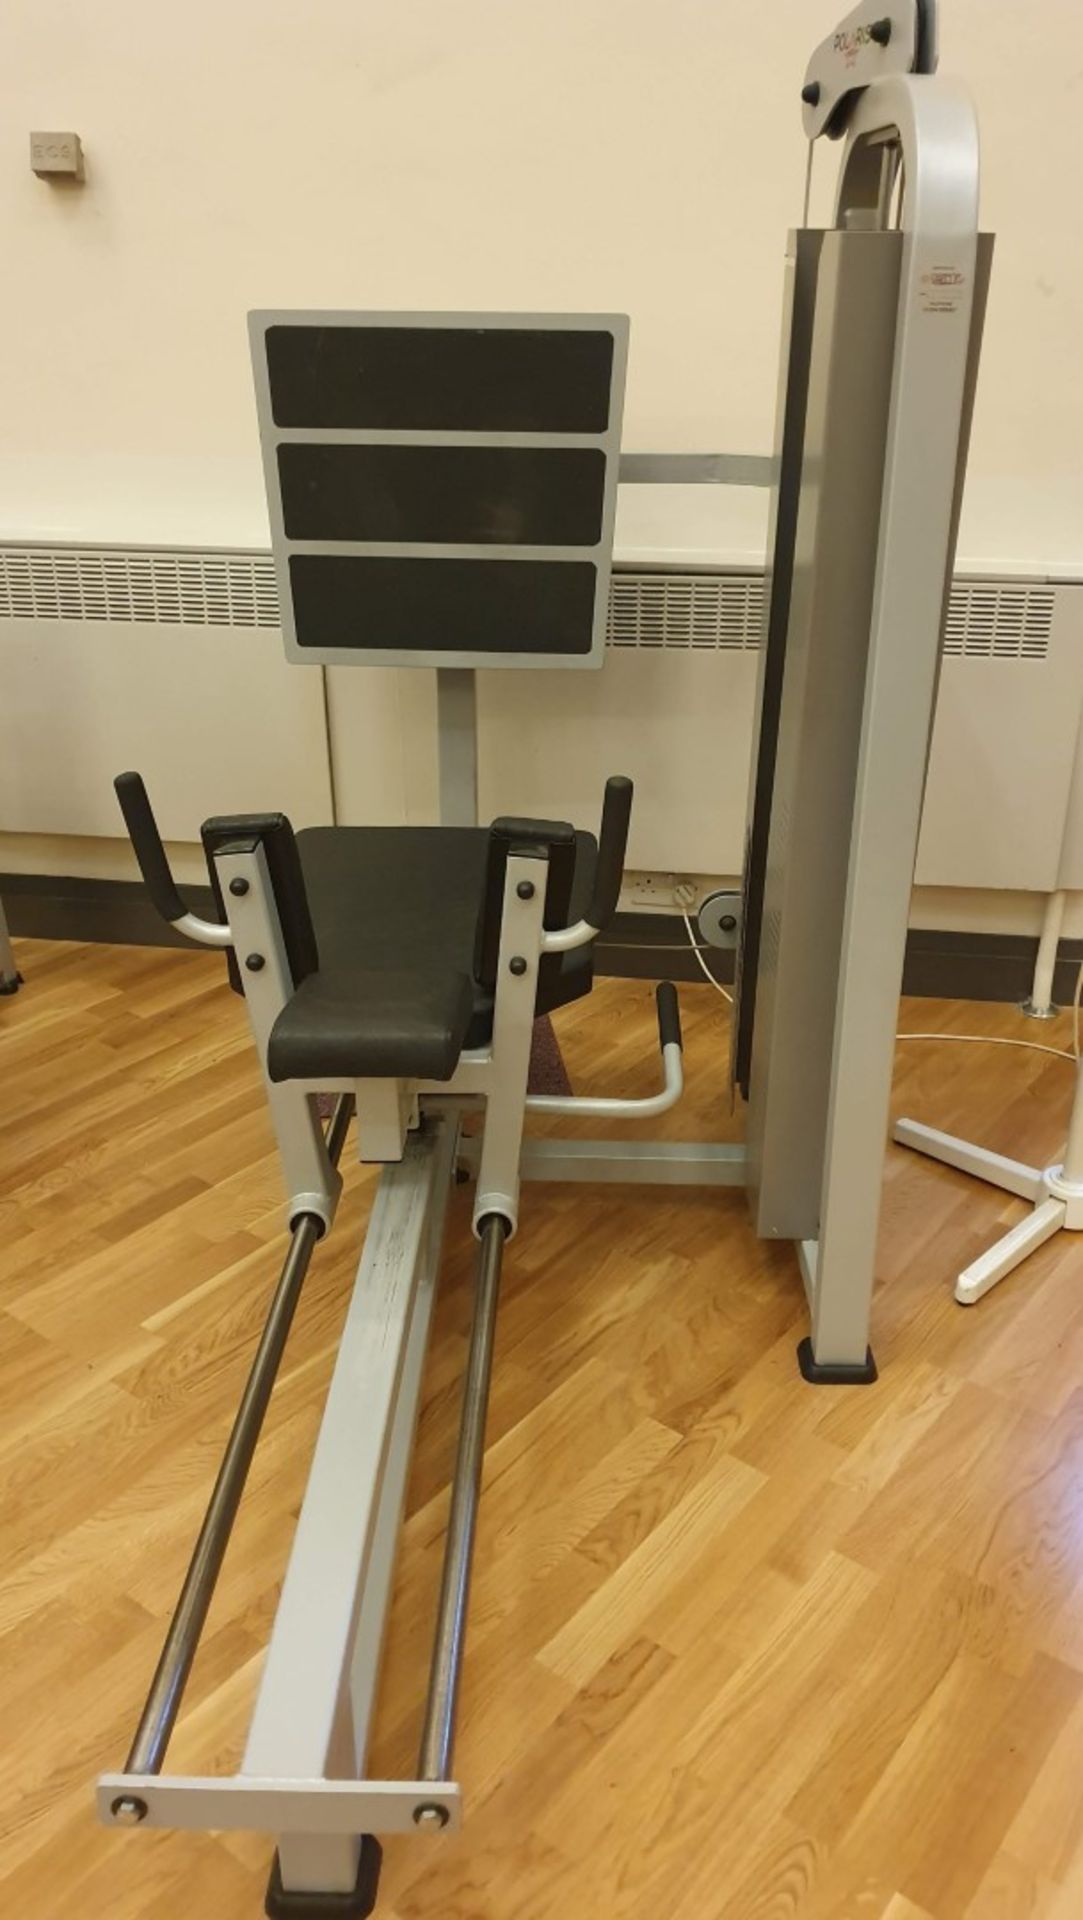 1 x Polaris DE-204 Horizontal Leg Press Commercial Gym Machine - CL552 - Location: Altrincham WA14